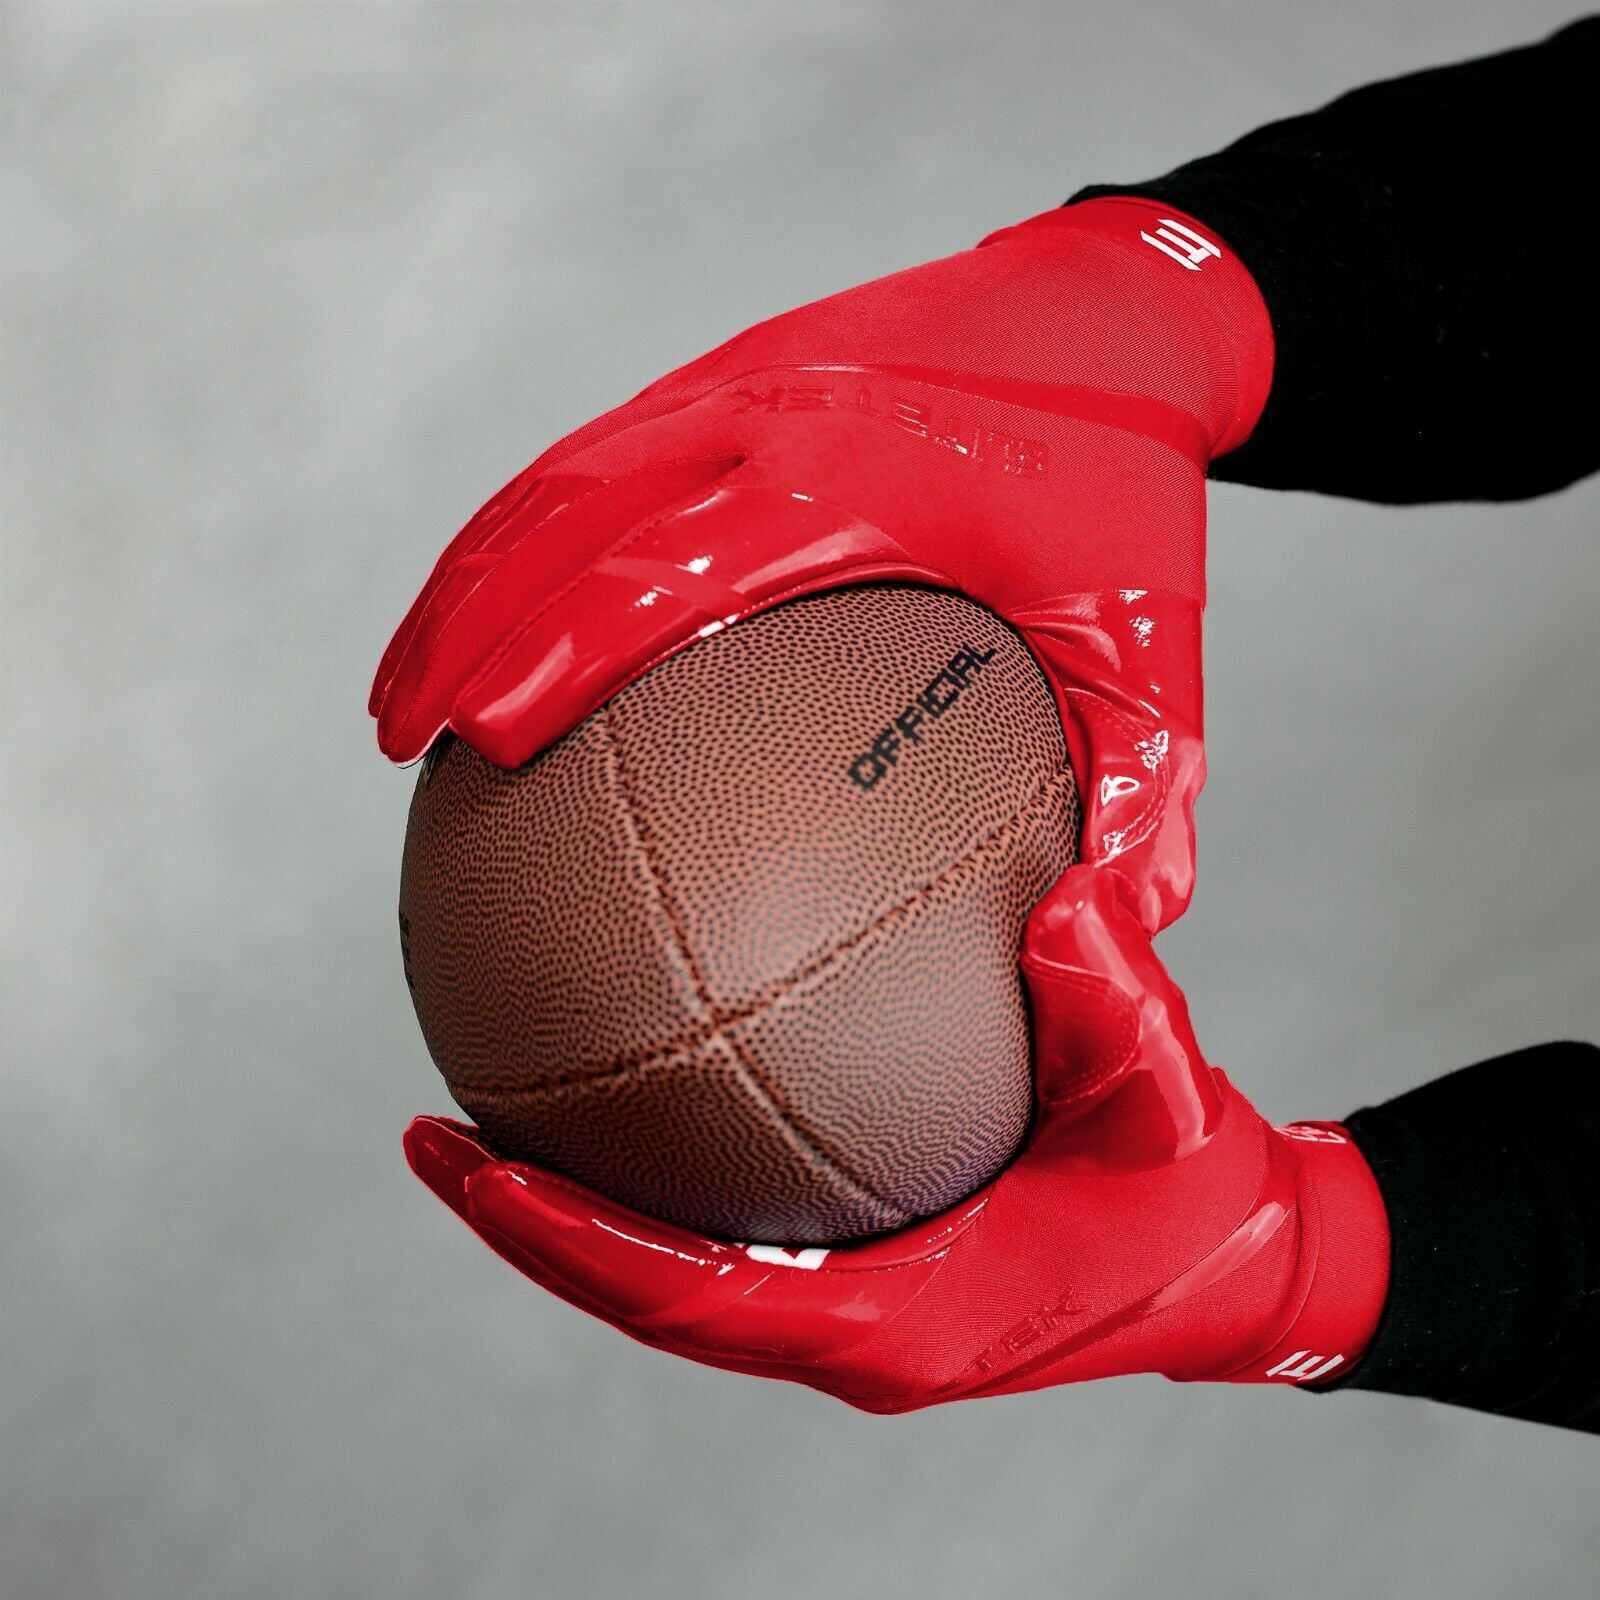 Youth Sizes Kids EliteTek RG-14 Super Tight Fitting Football Gloves Easy Slip On Design No Wrist Strap 